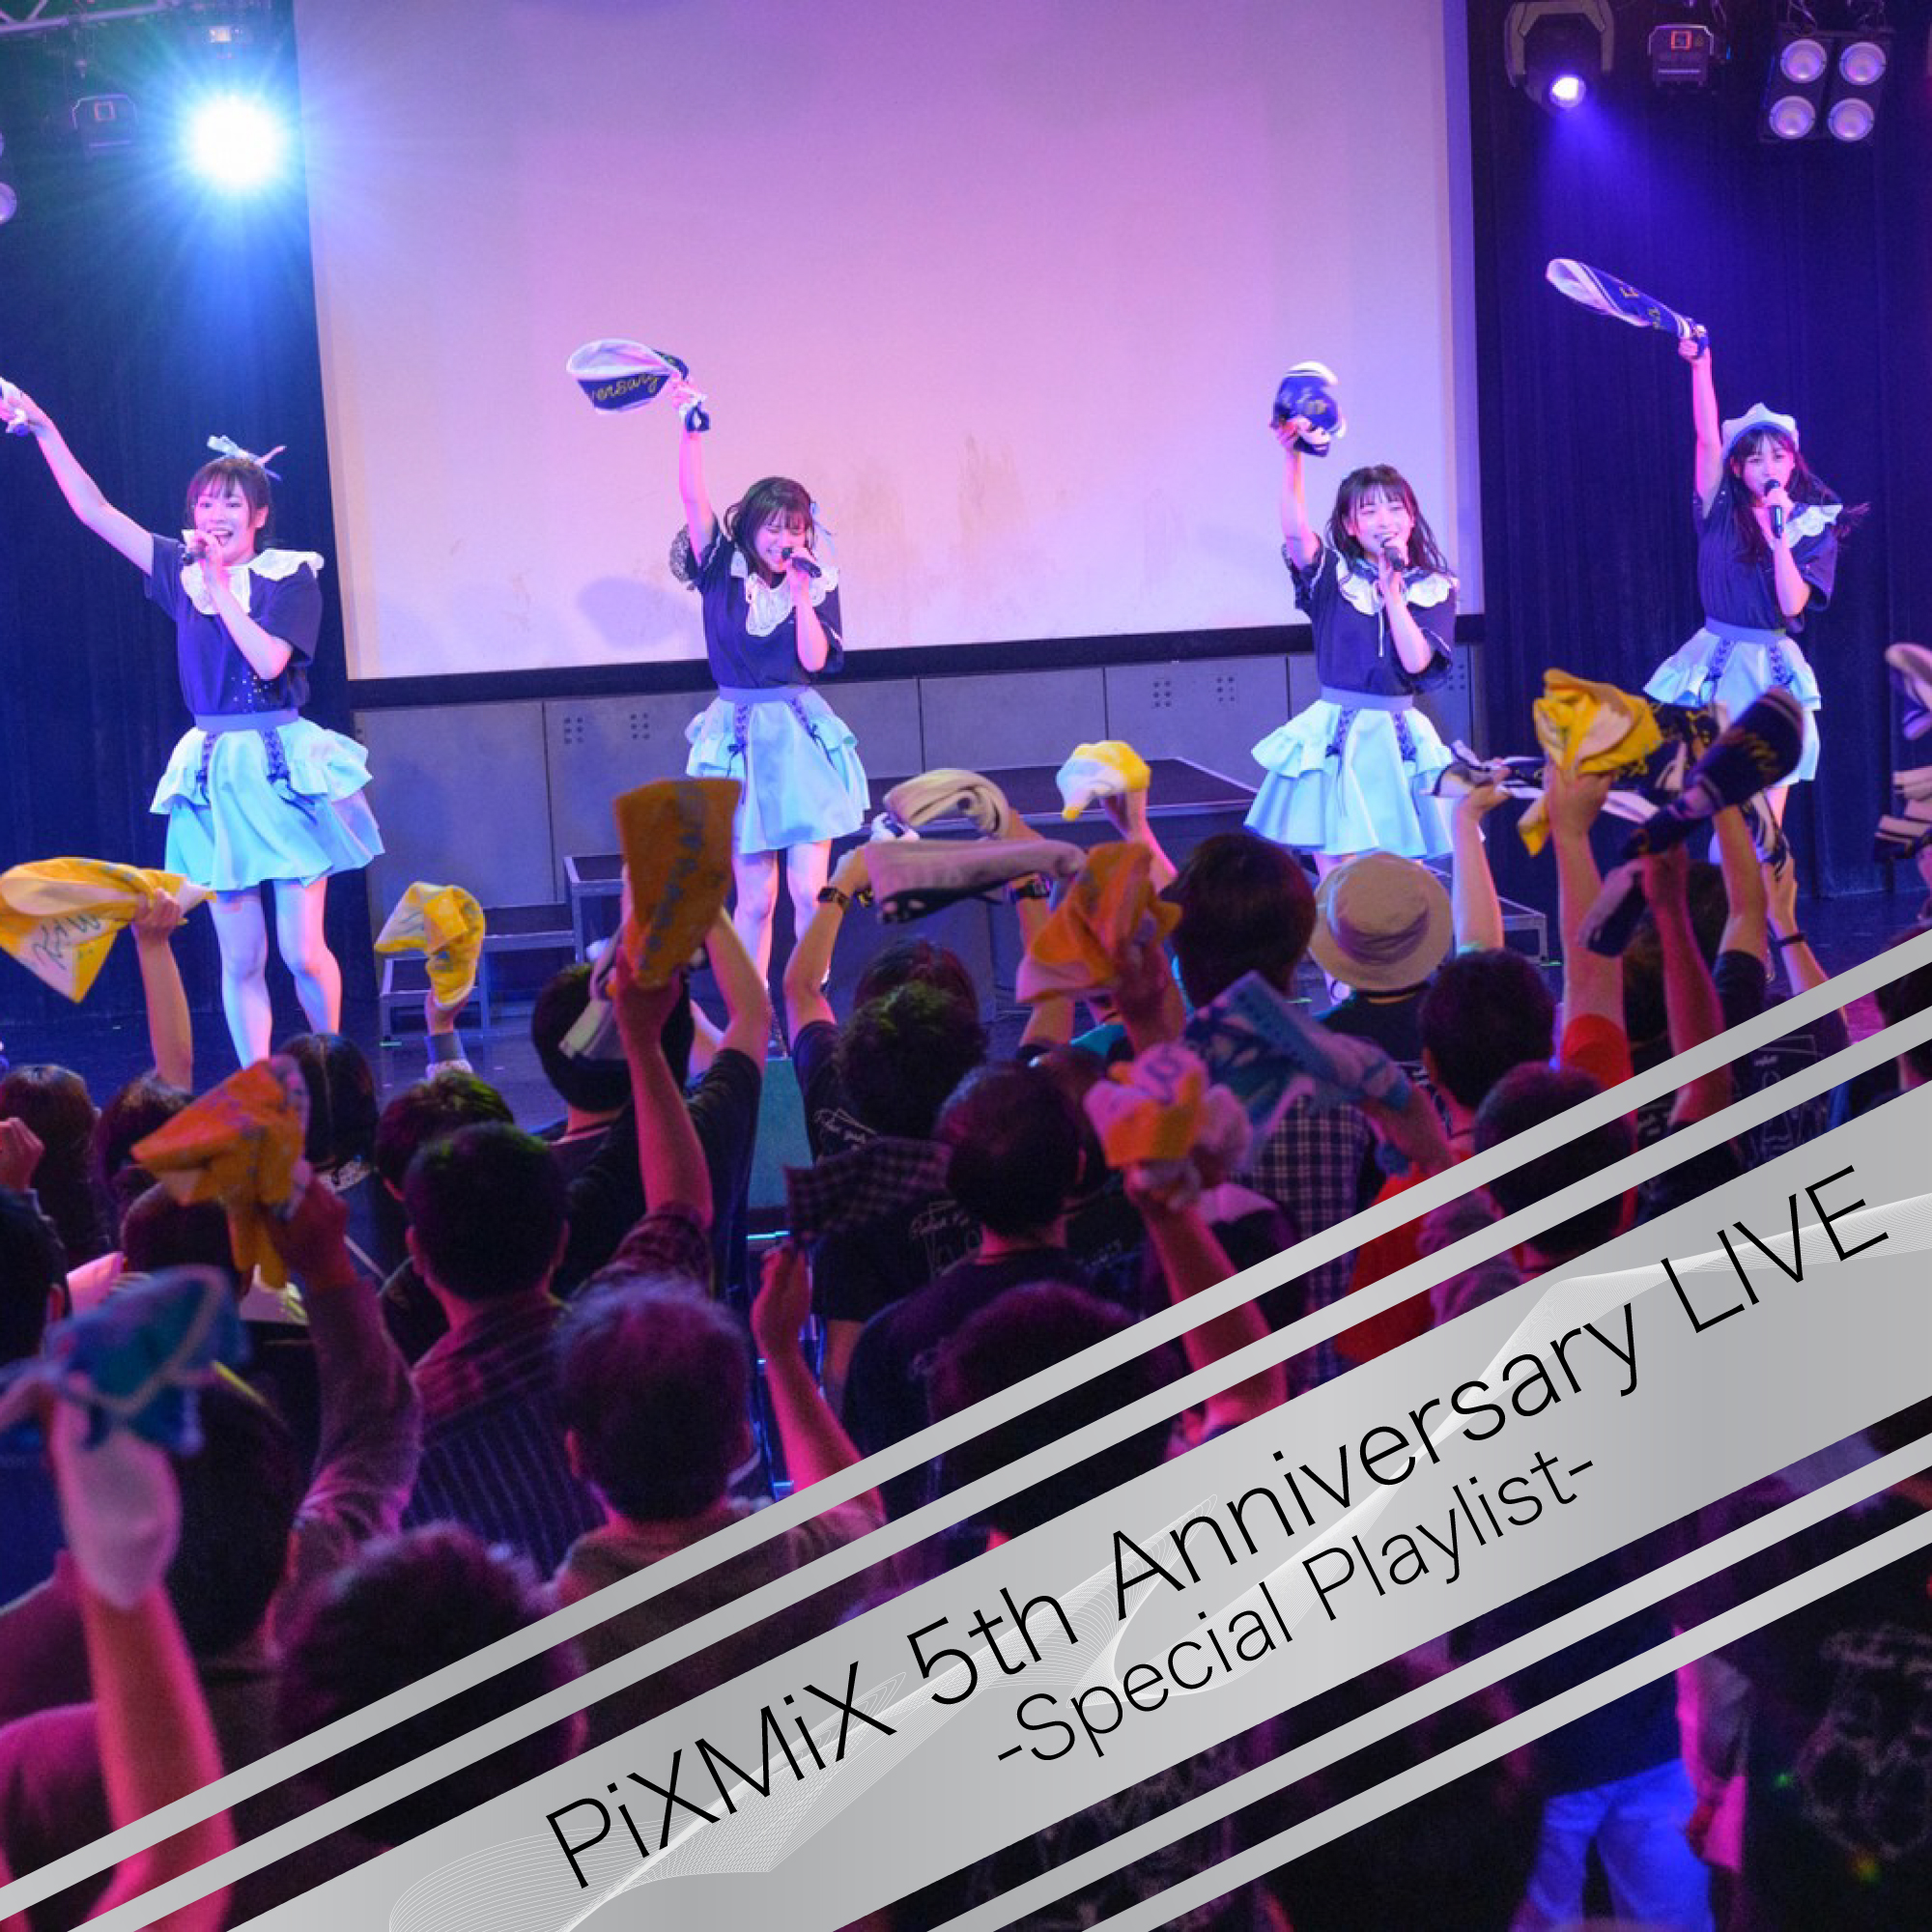 PiXMiX 5th Anniversary LIVE Set List